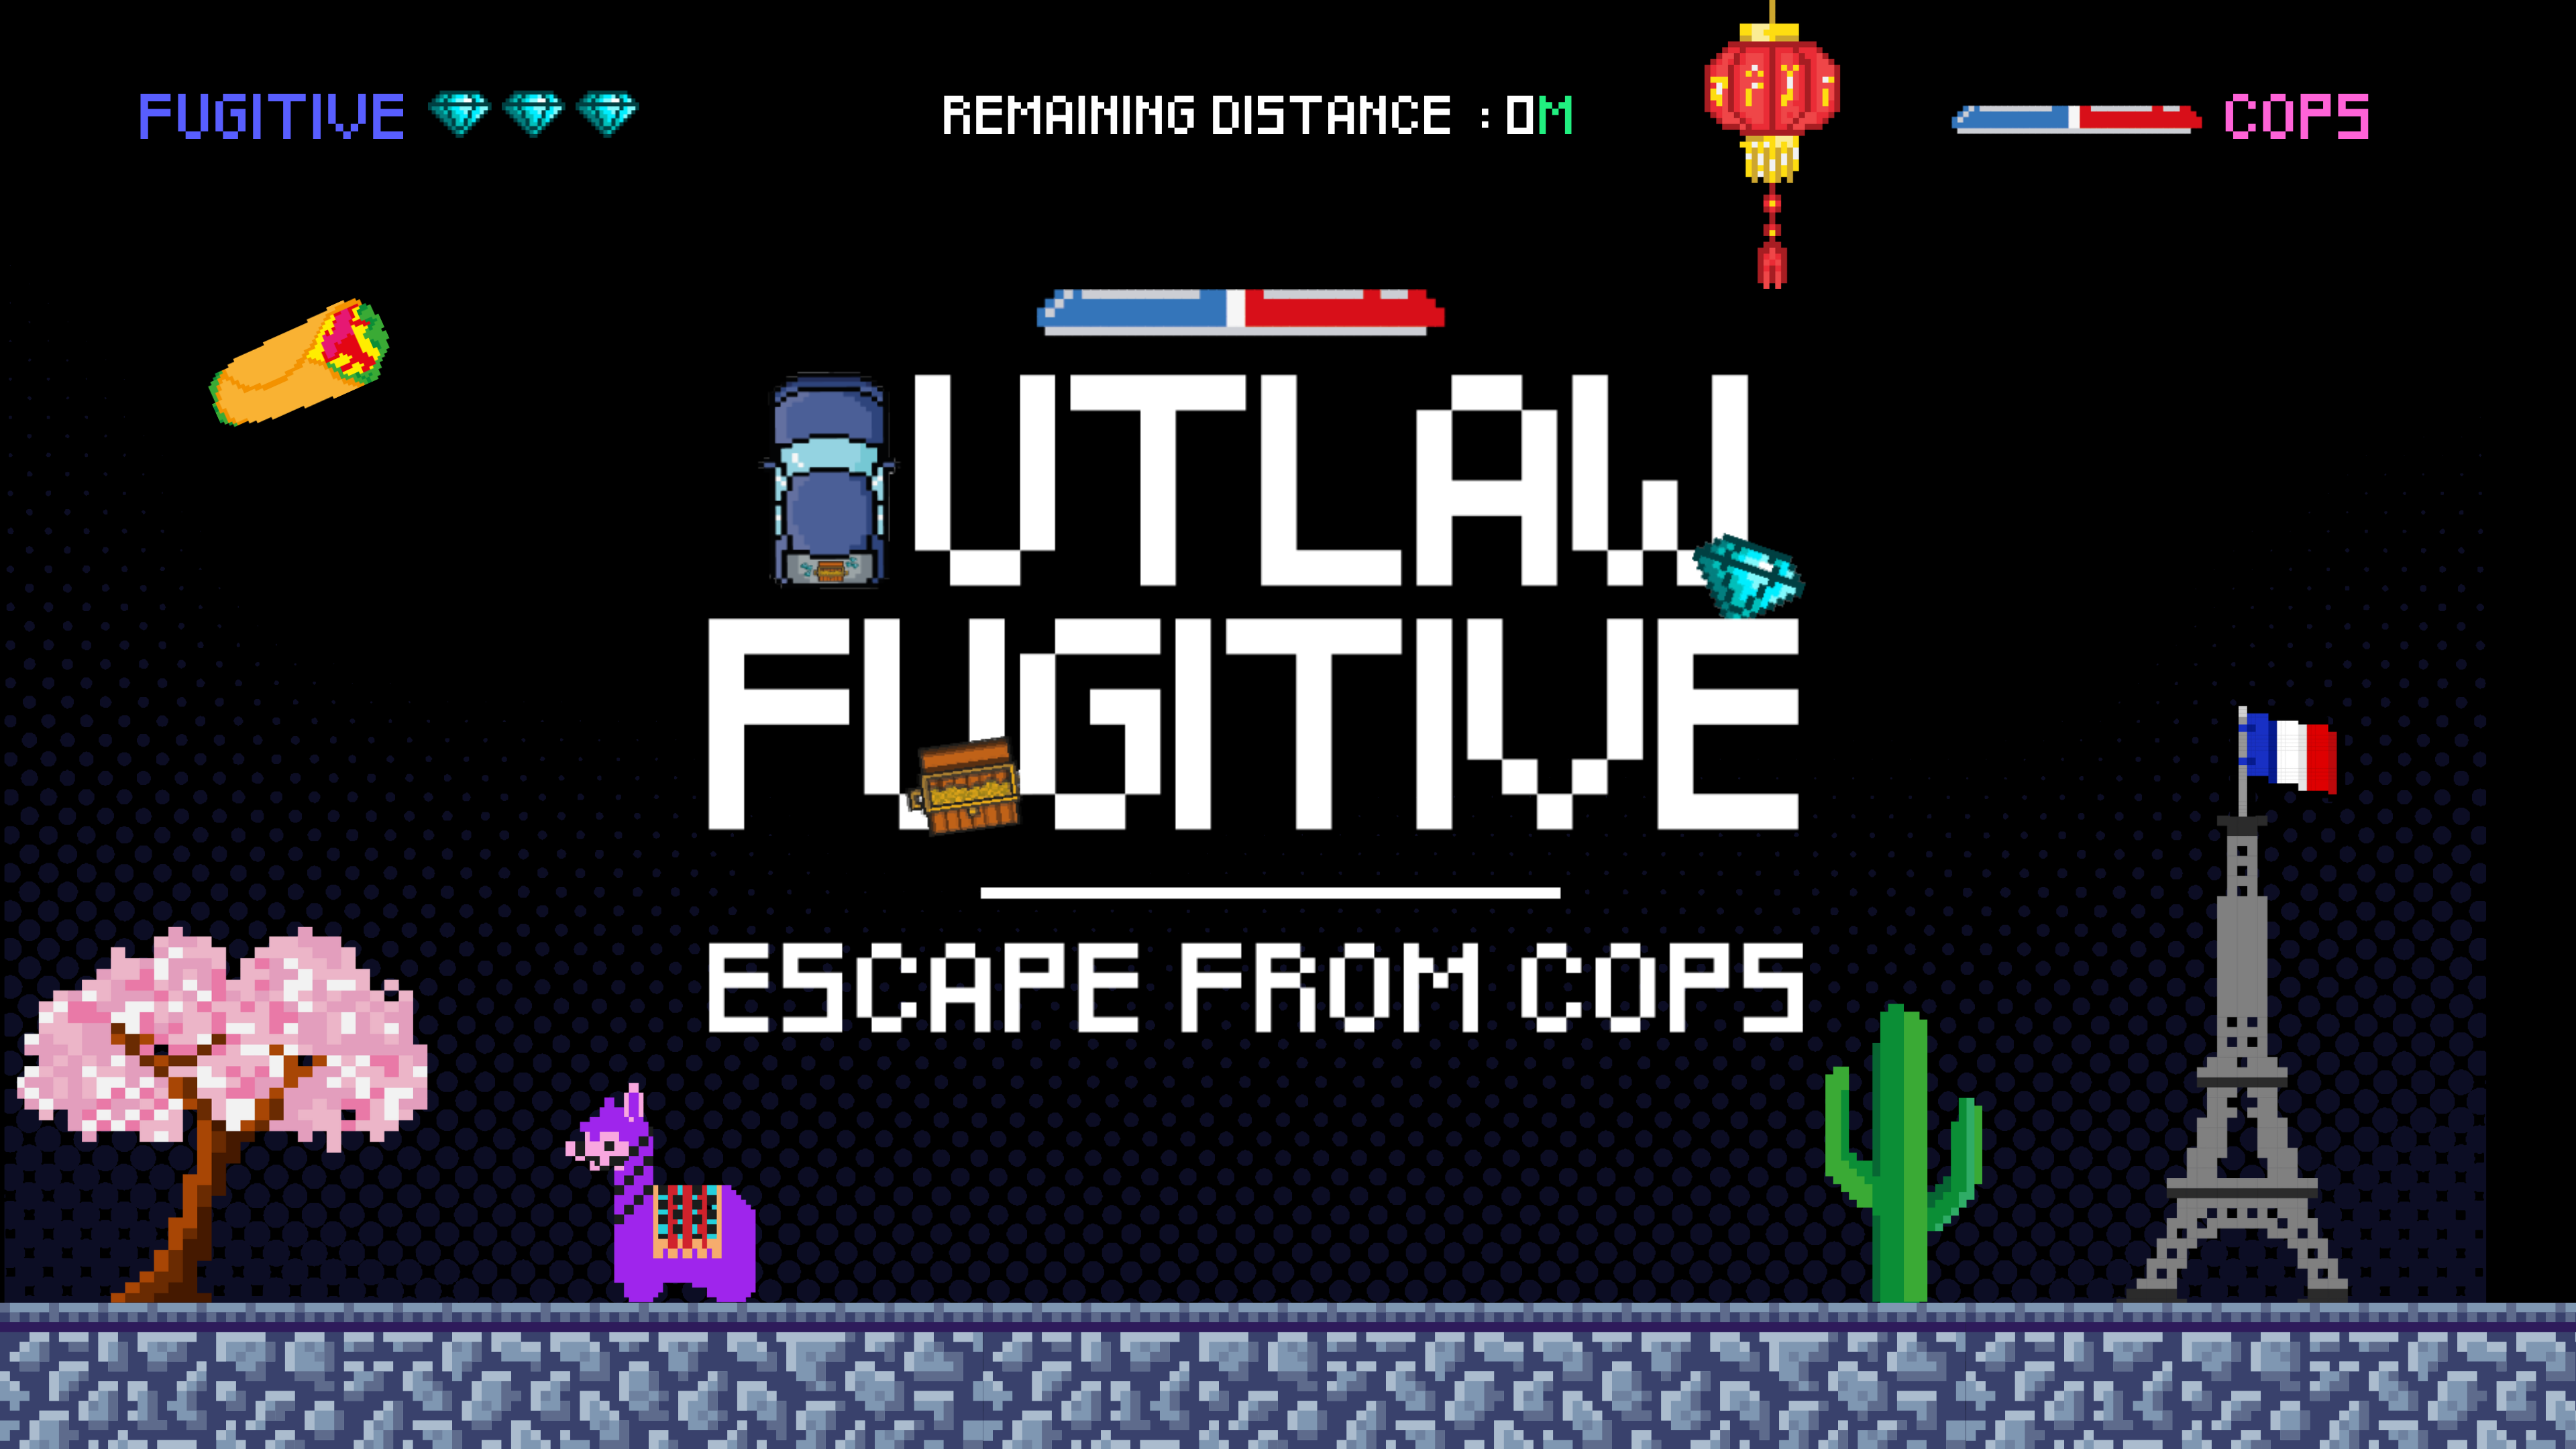 Outlaw Fugitive